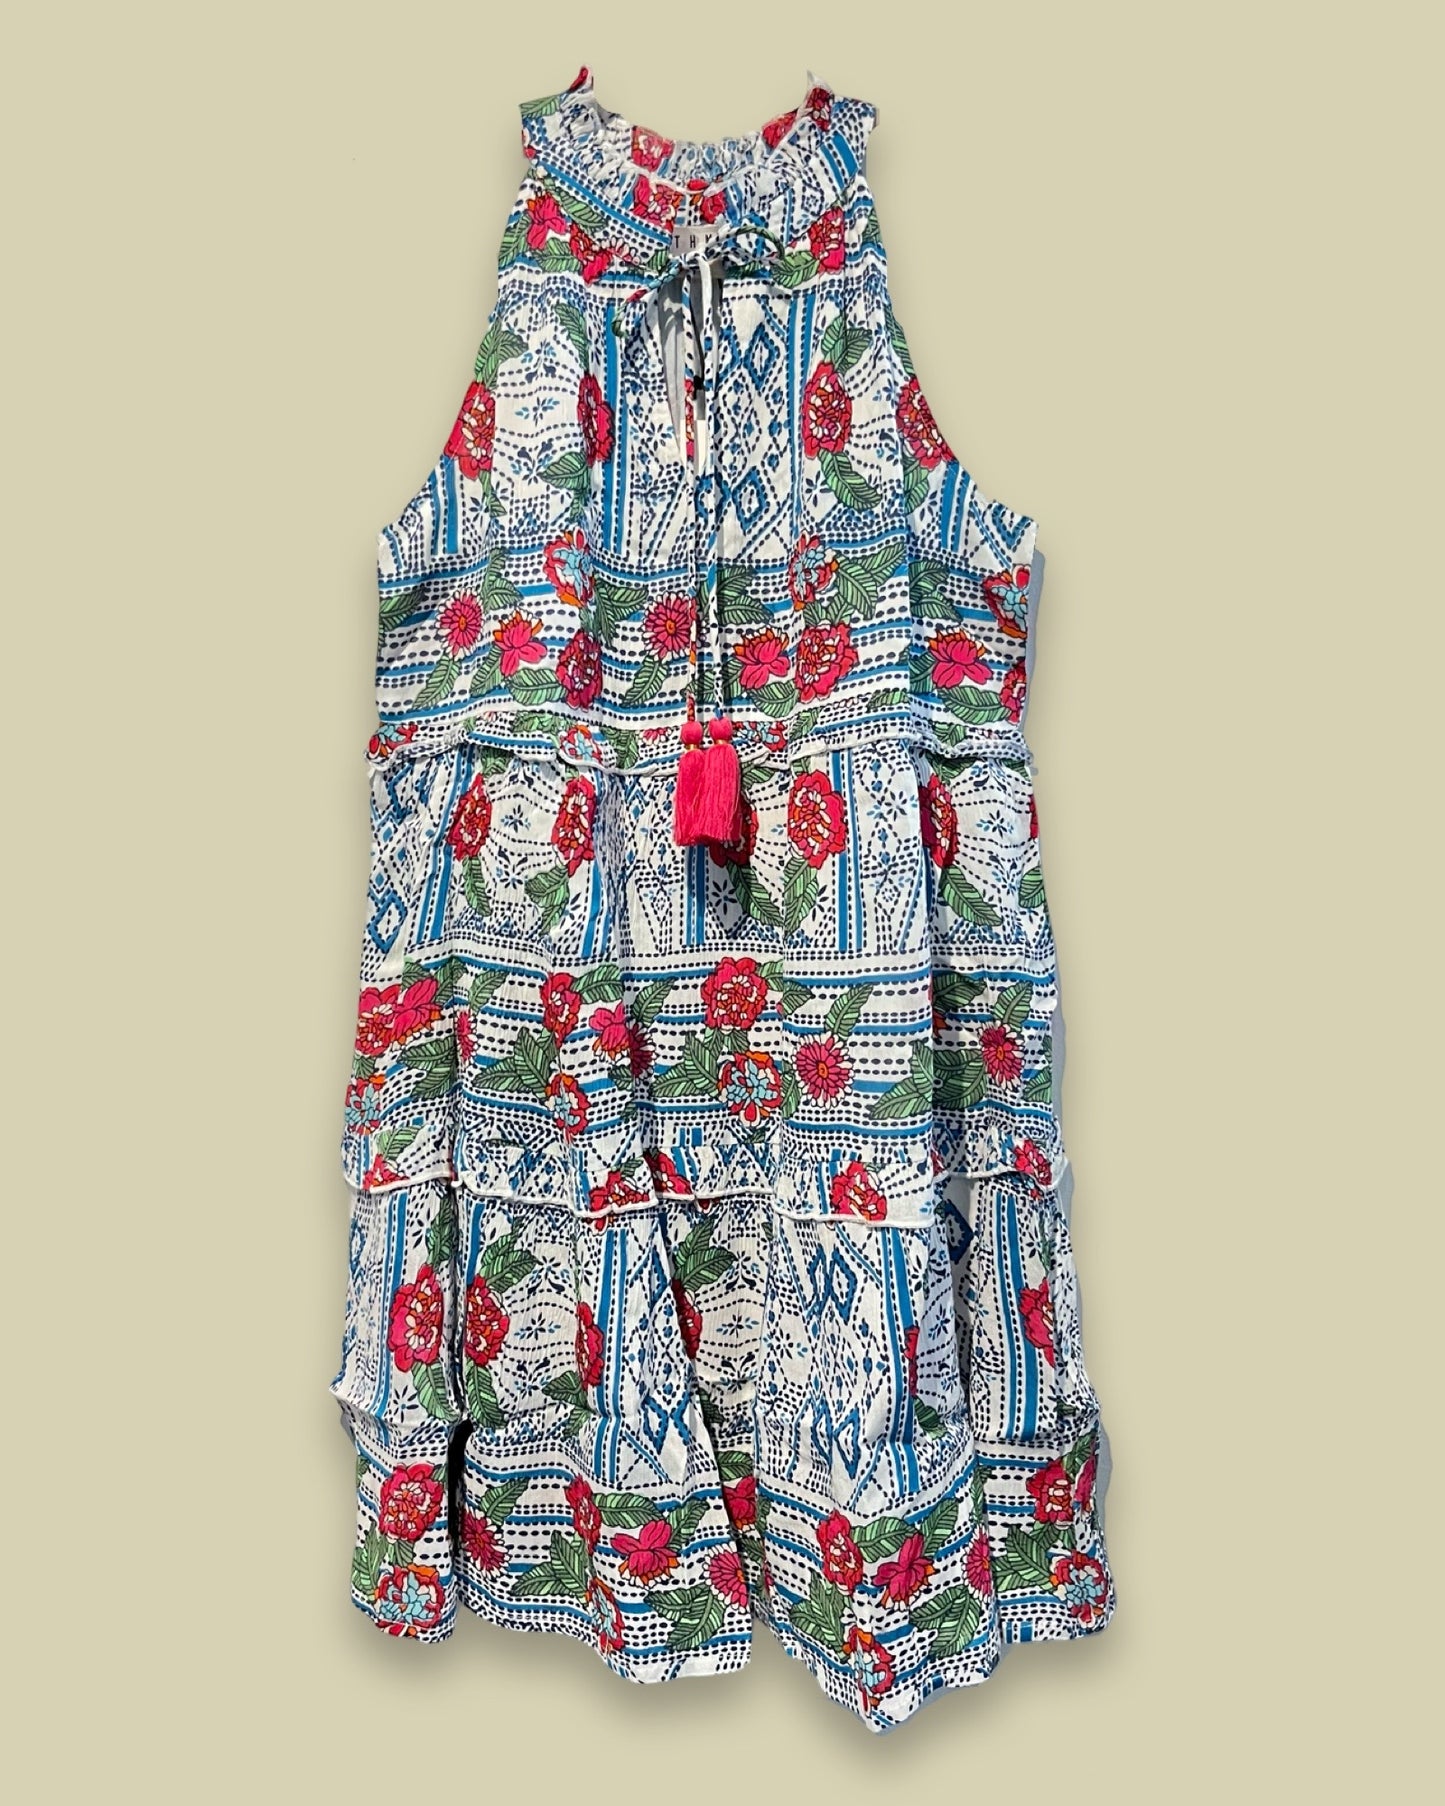 Batik Summer Dress